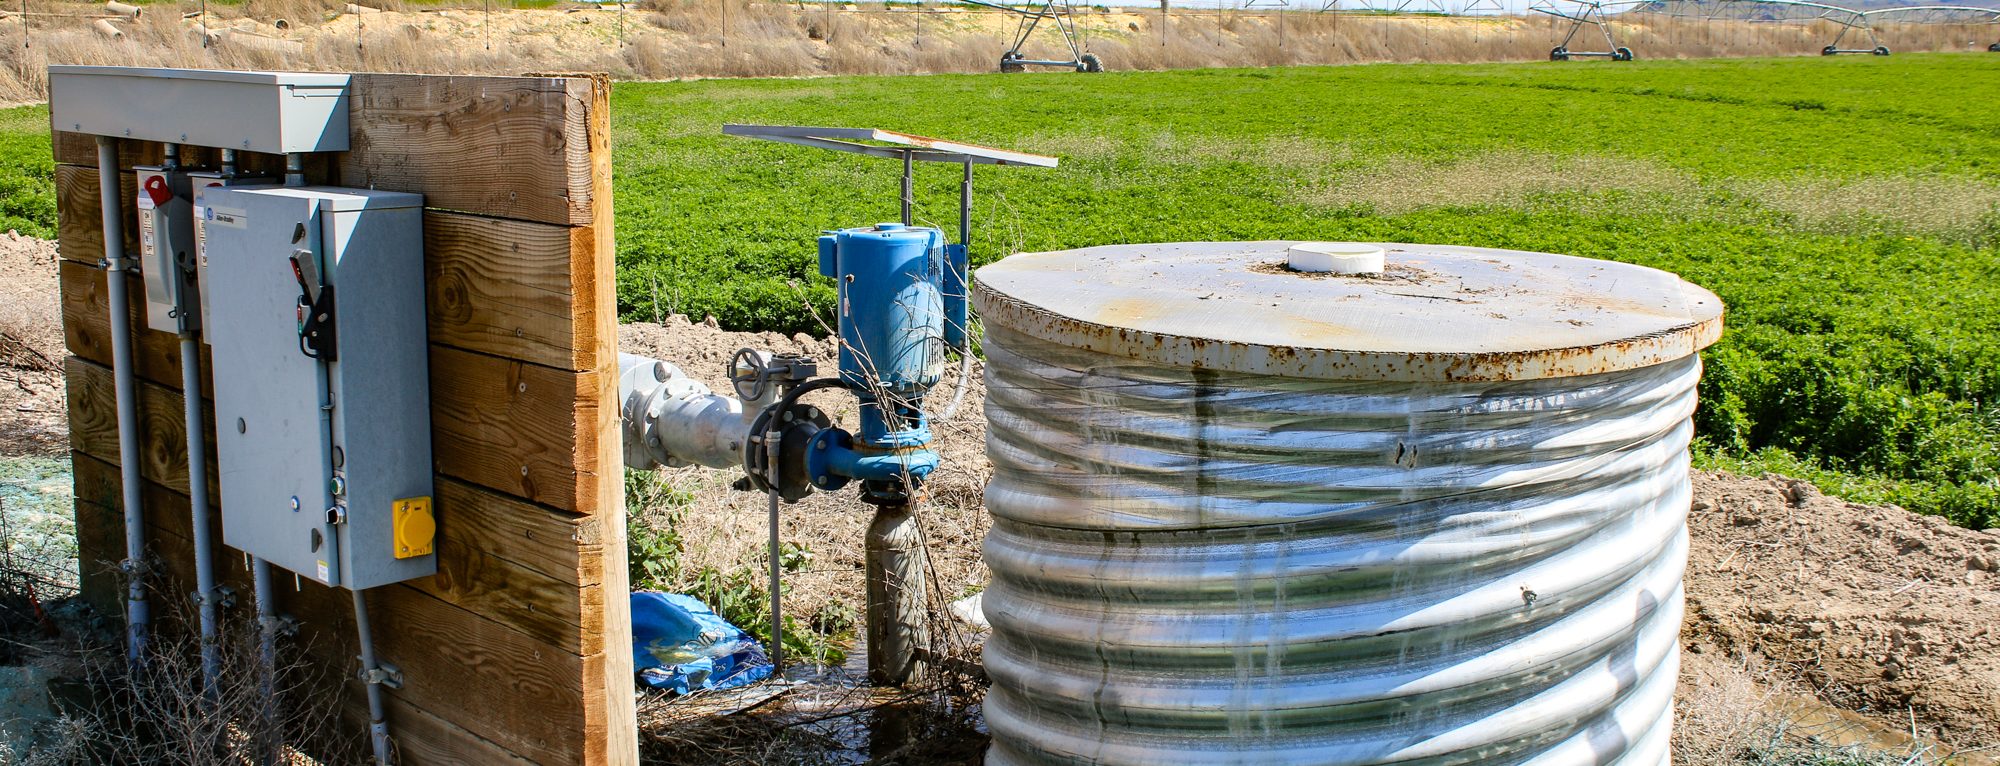 Homedale Alfalfa Farm - Irrigation equipment